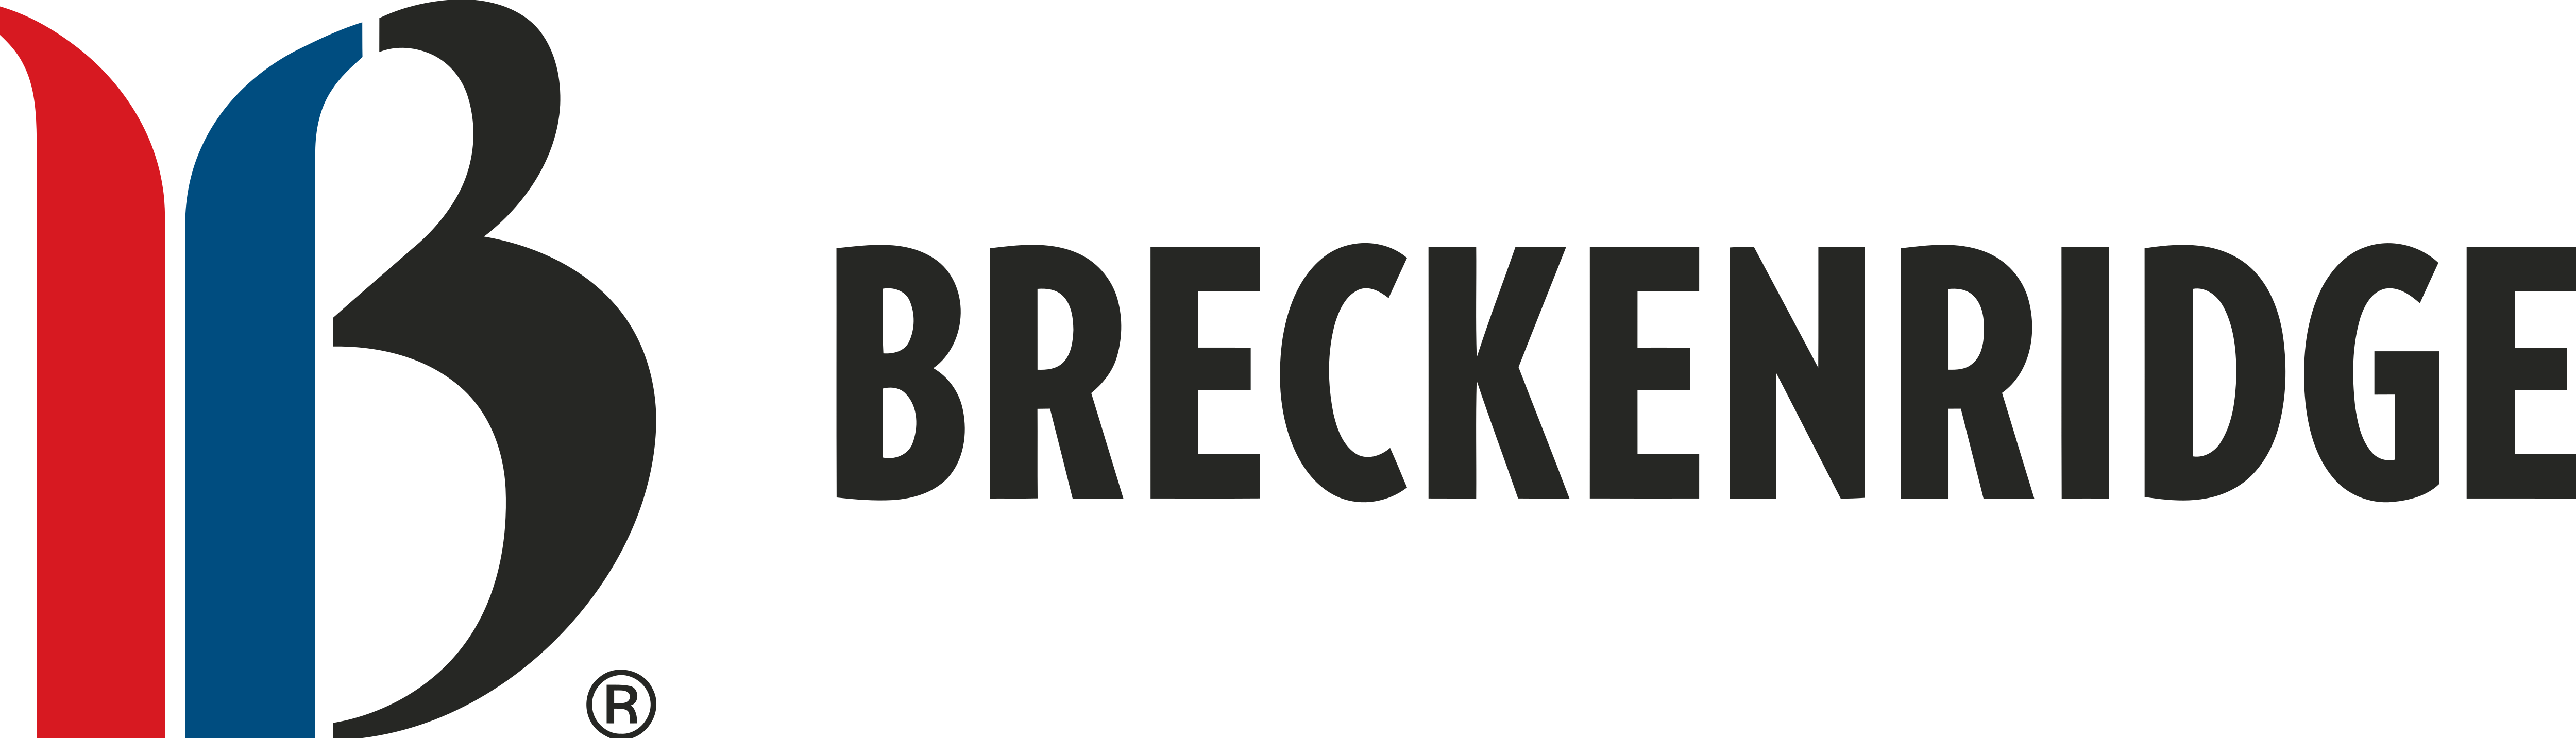 Breckenridge_Ski_Resort_Logo